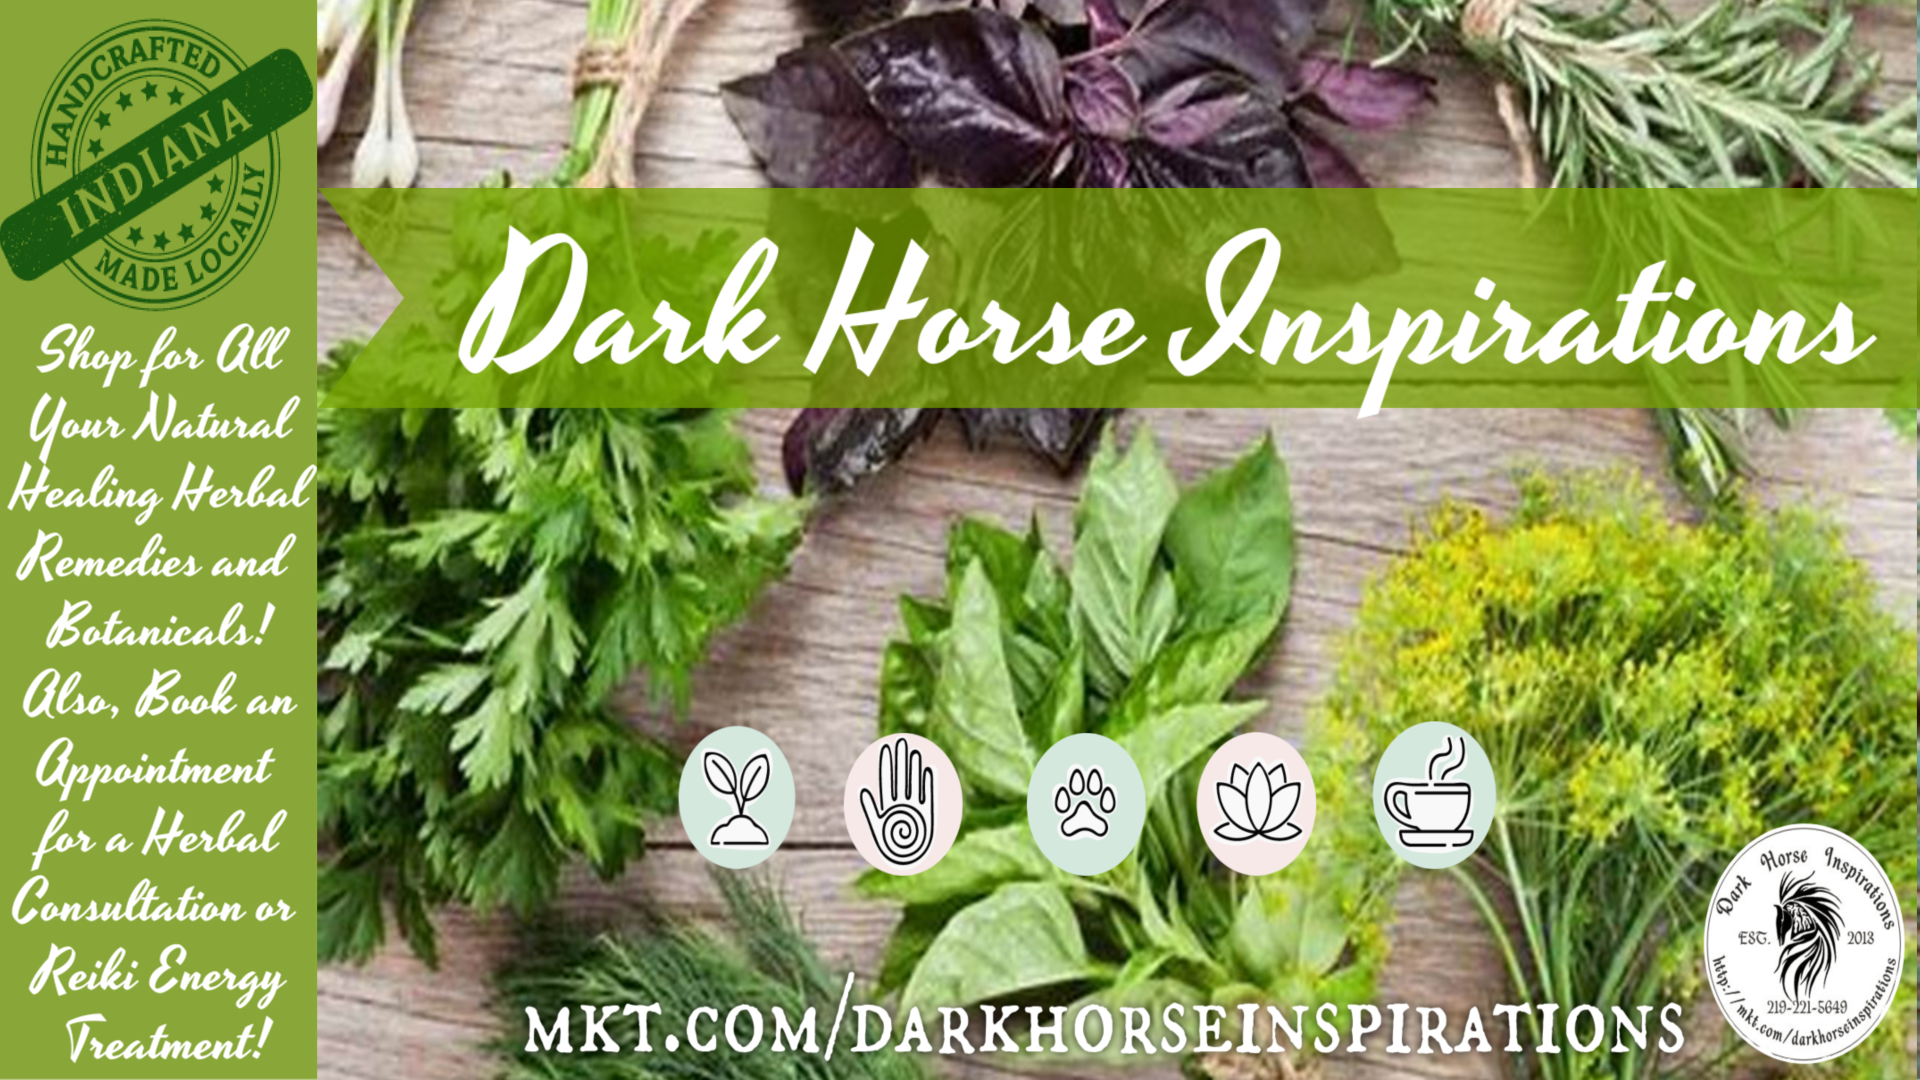 DARK HORSE INSPIRATIONS